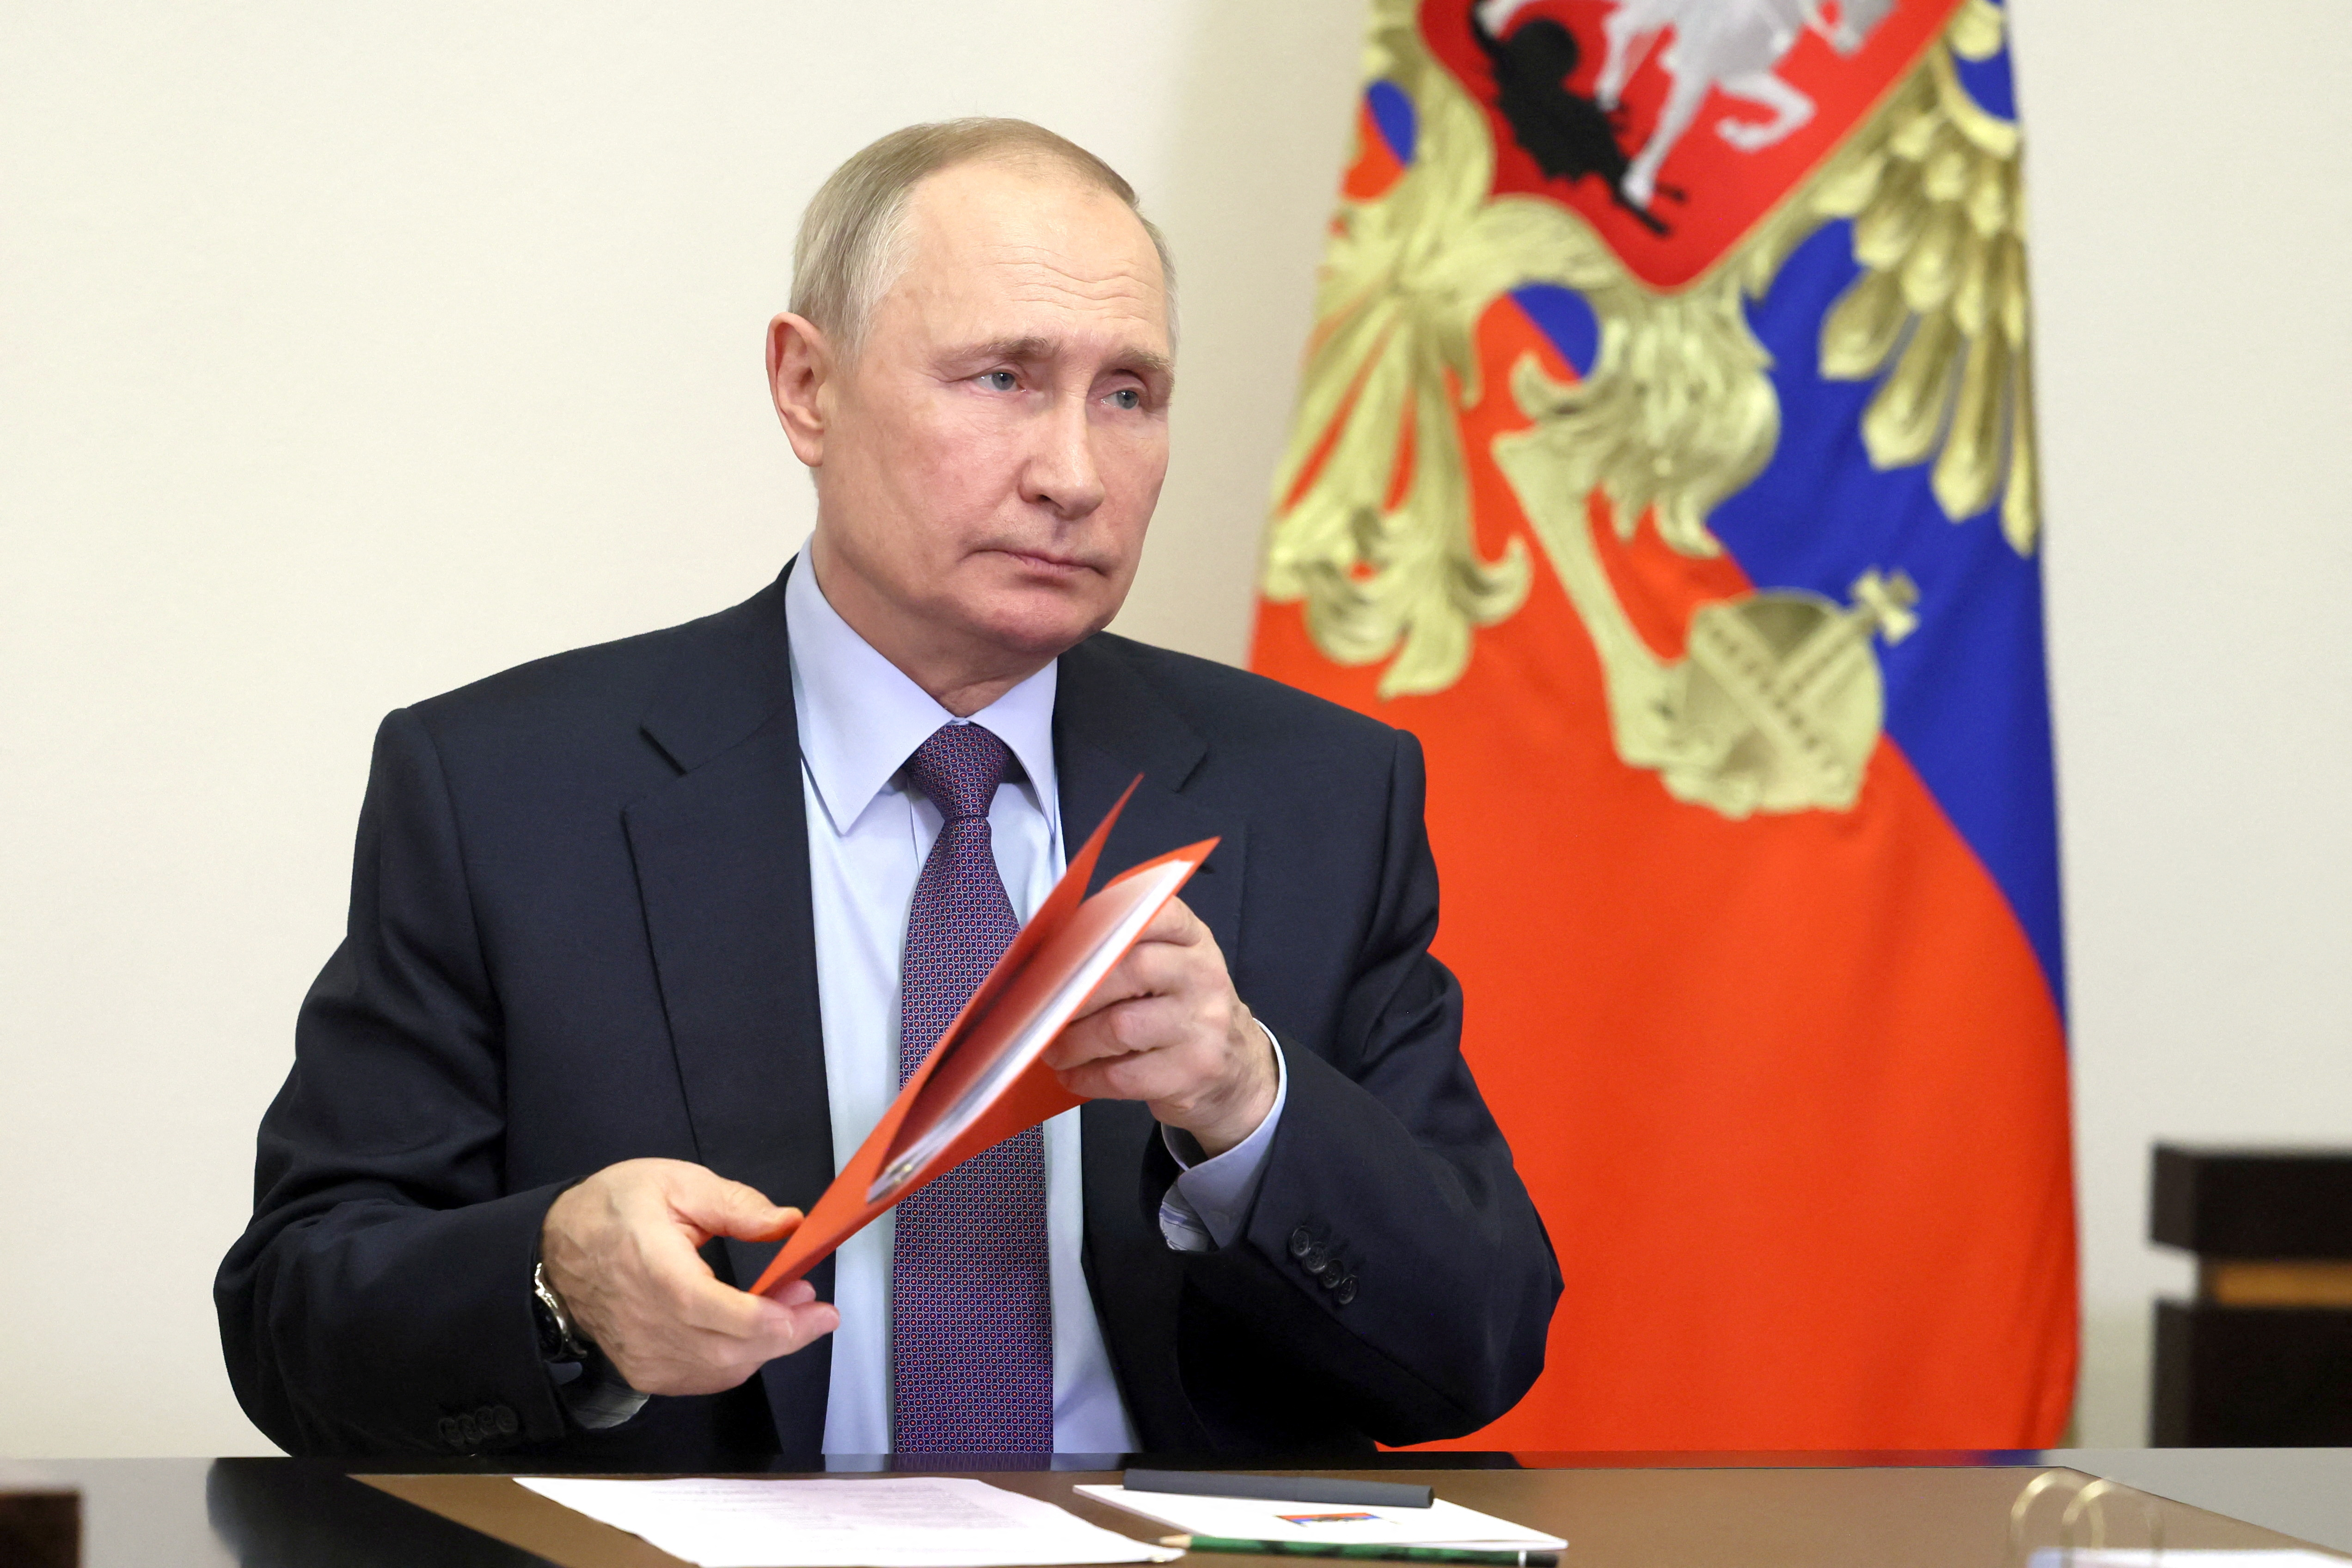 Vladimir Putin, President of Russia (Sputnik/Mikhail Metzel/Pool via REUTERS)